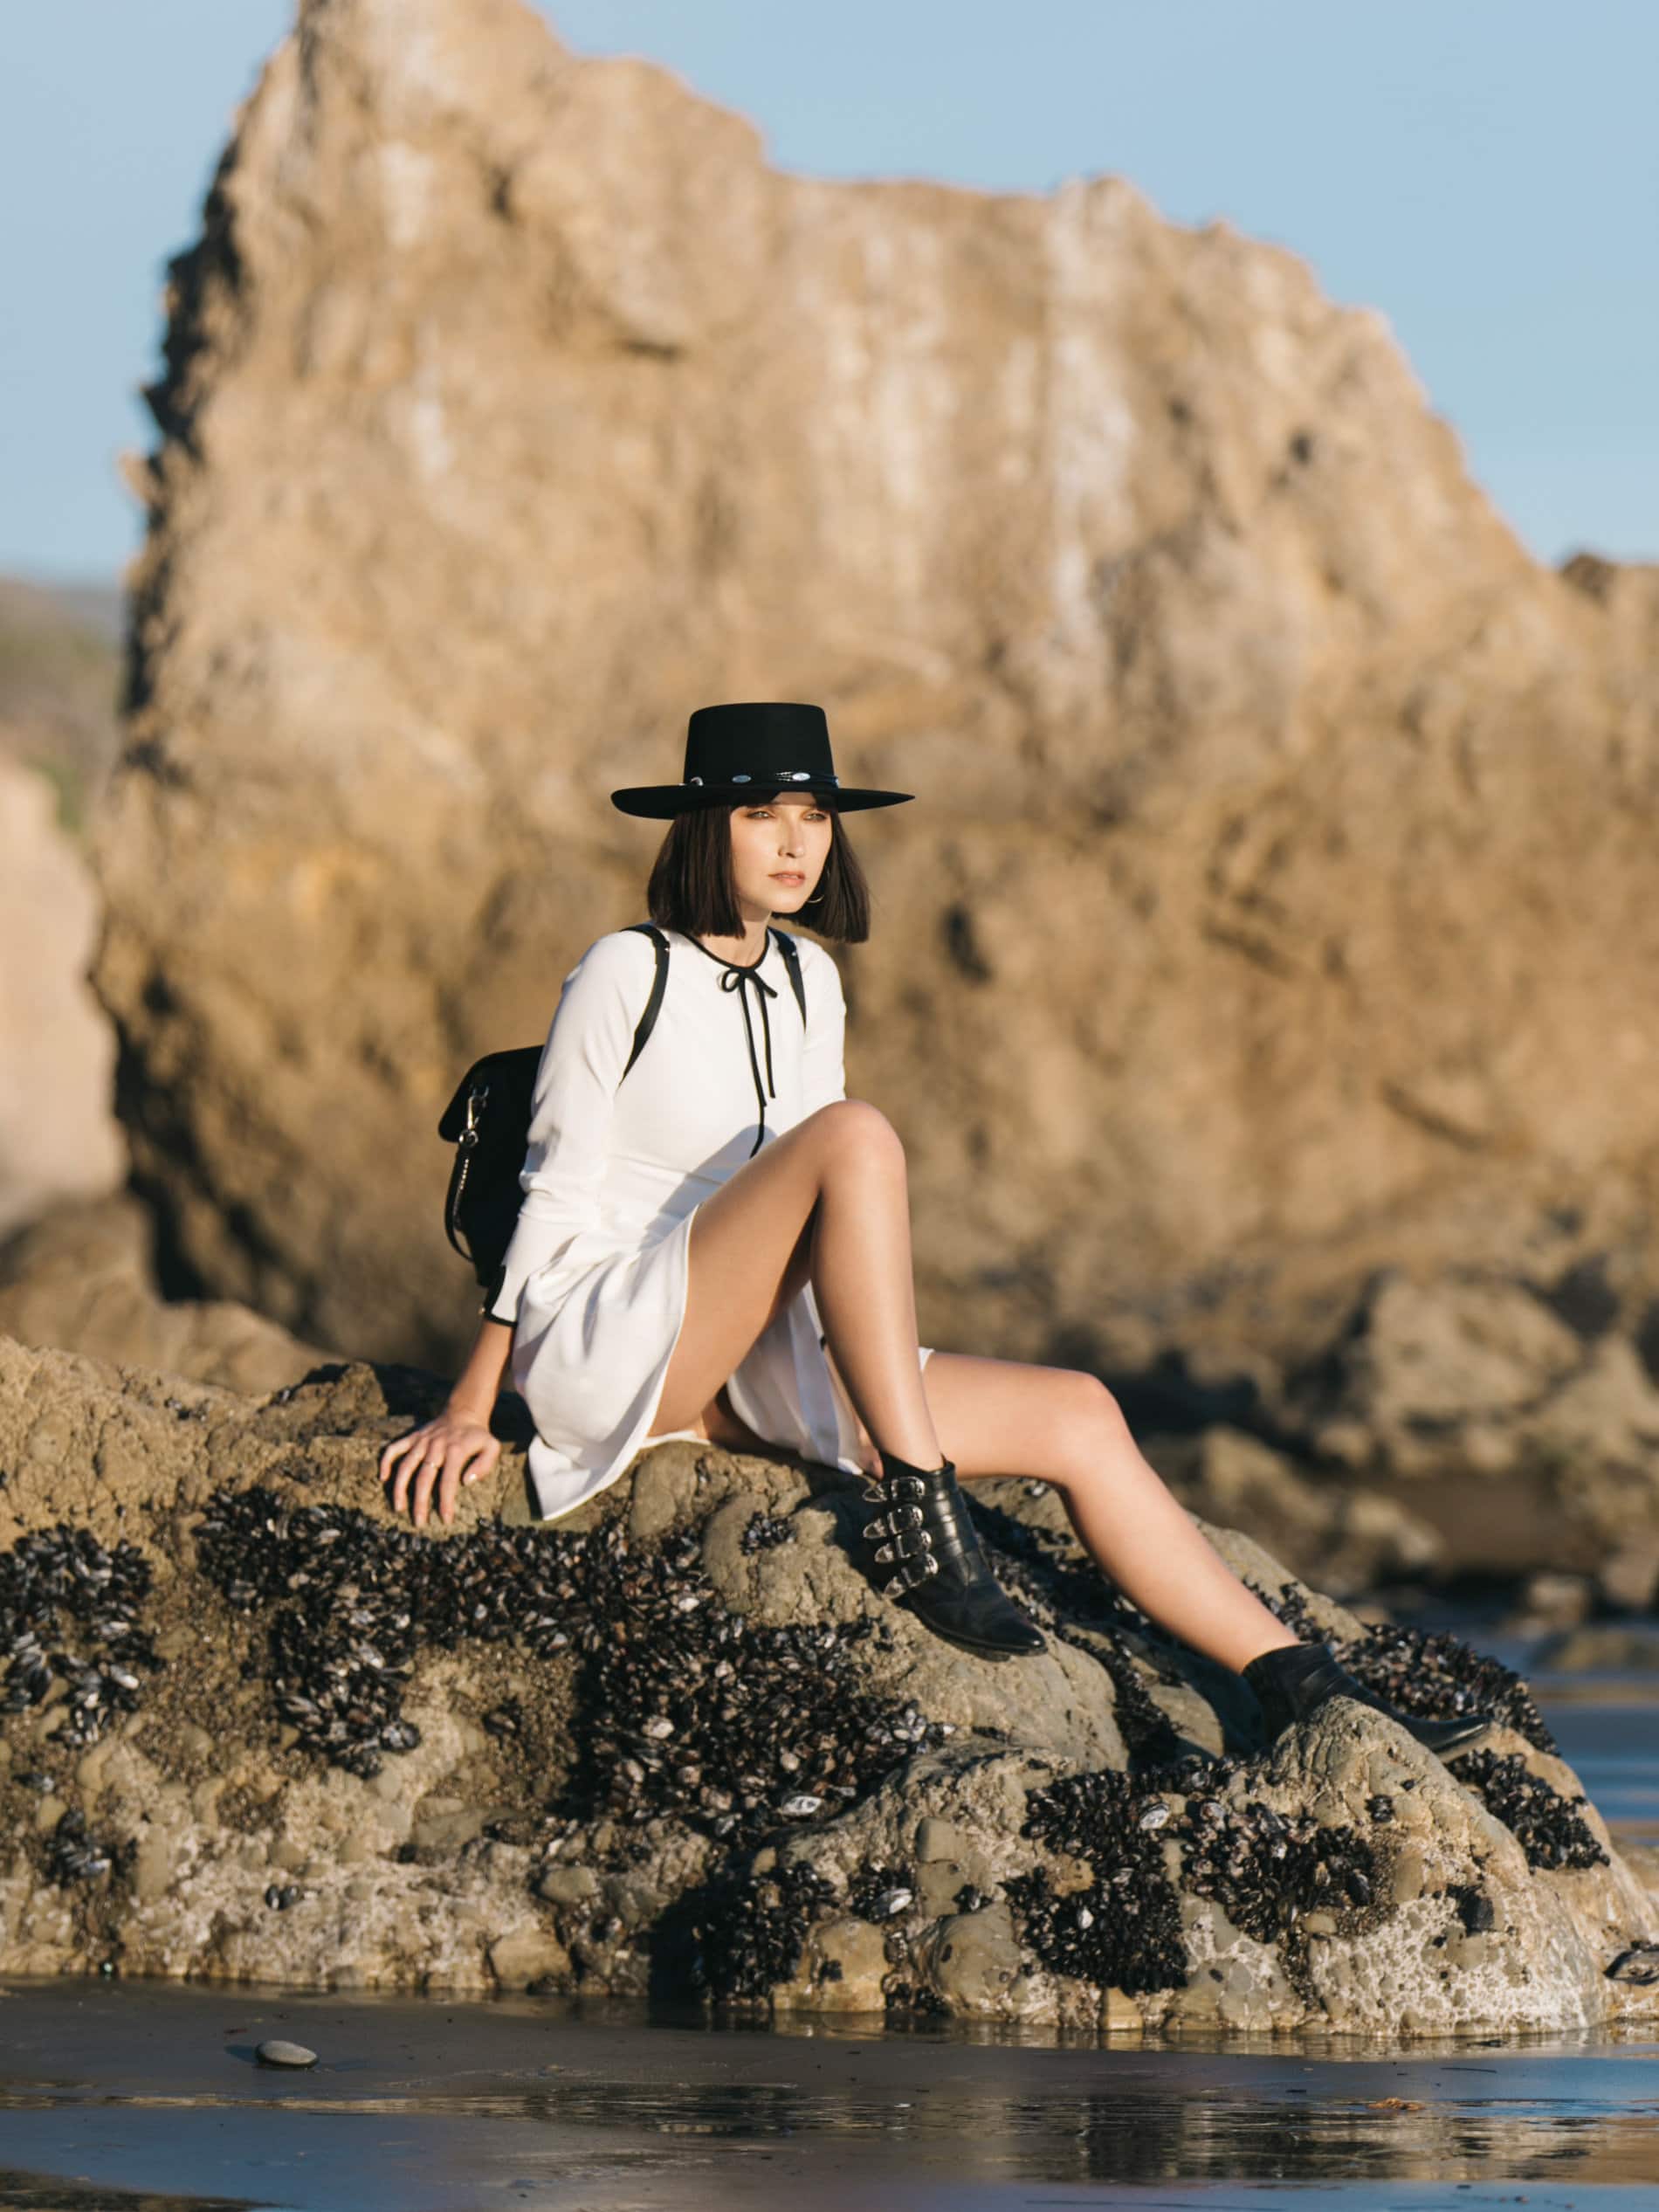 Sit and stare, cowboy outfit - El Matador Beach, Malibu